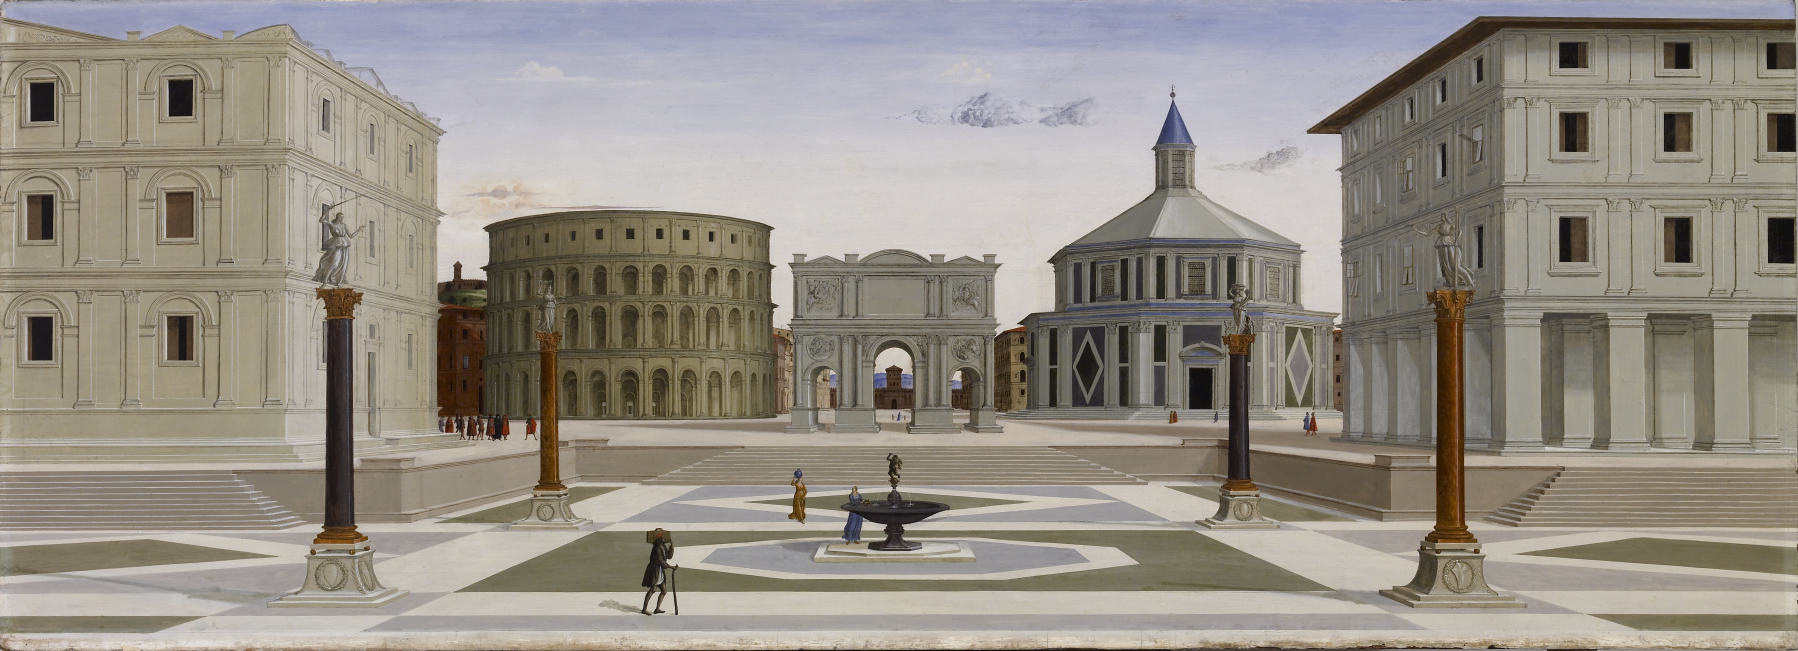 The Ideal City of Baltimore, Fra Carnevale or Leon Battista Alberti, c. 1480-1484.